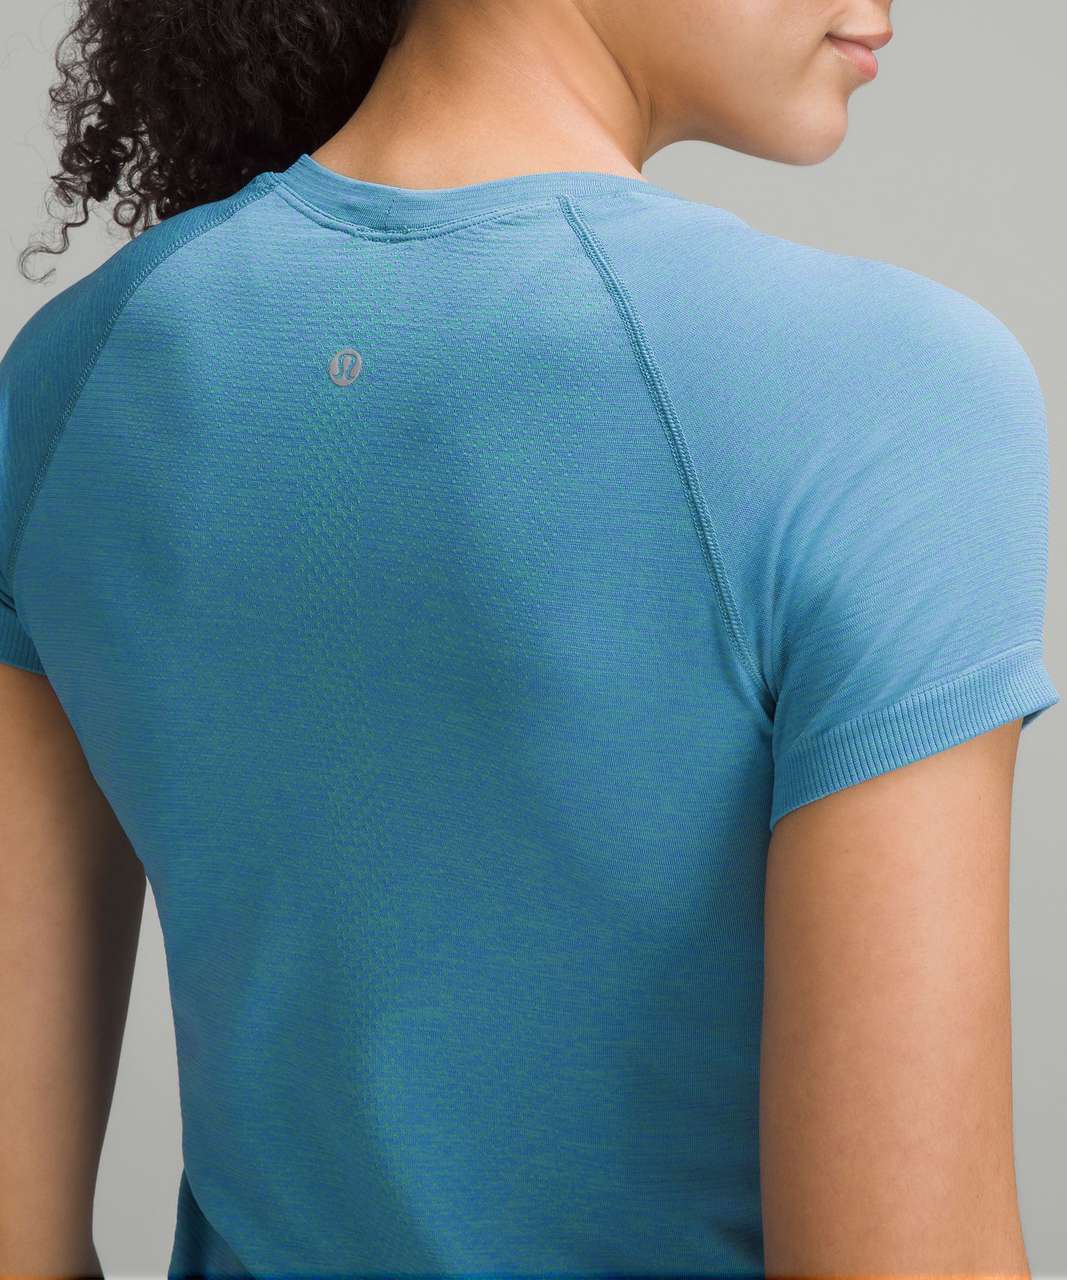 Lululemon Swiftly Tech Short-Sleeve Shirt 2.0 *Race Length - Maldives Green / Wild Indigo